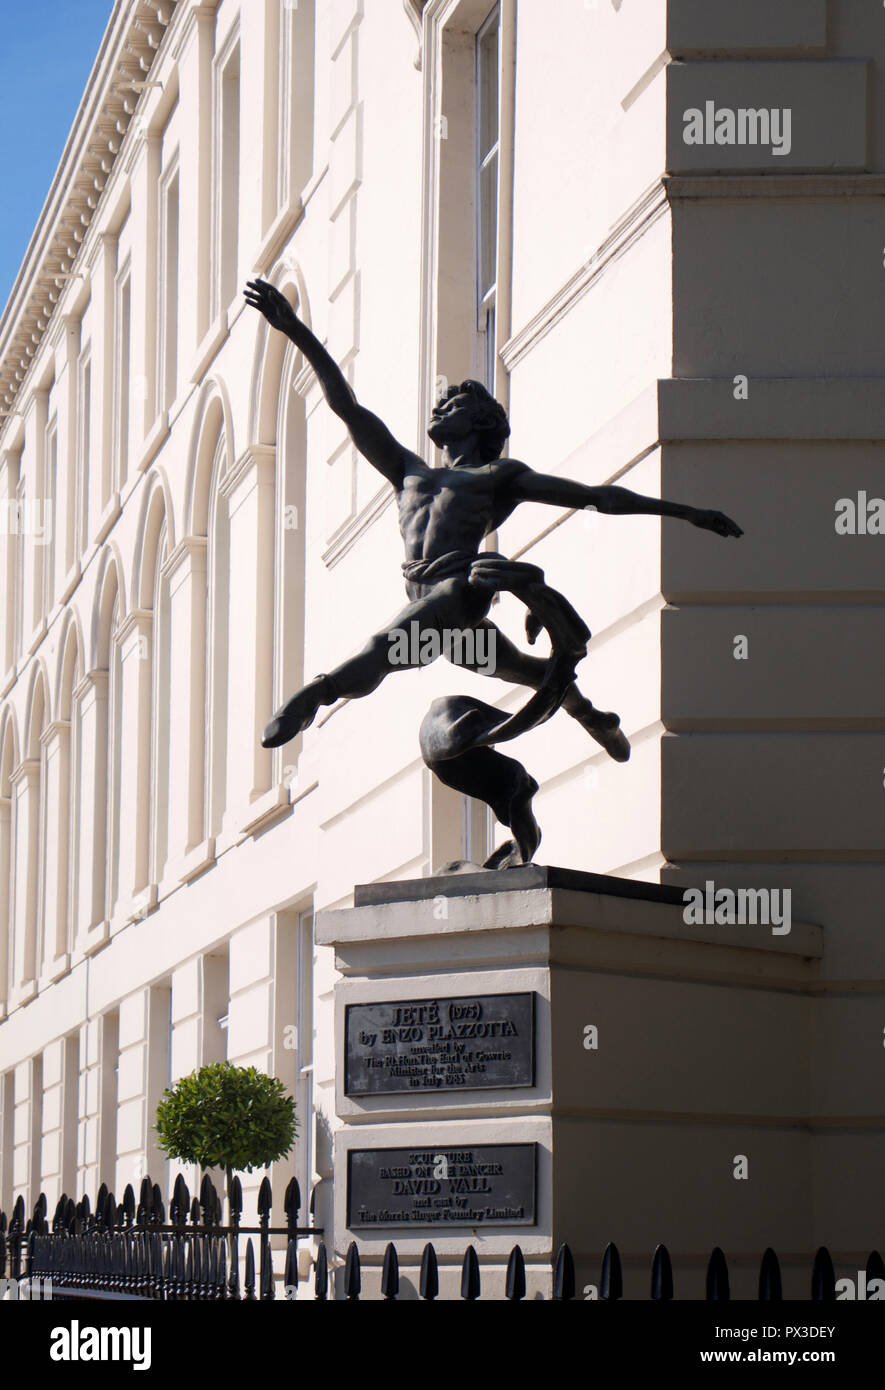 Jeté dance statue, London Stock Photo